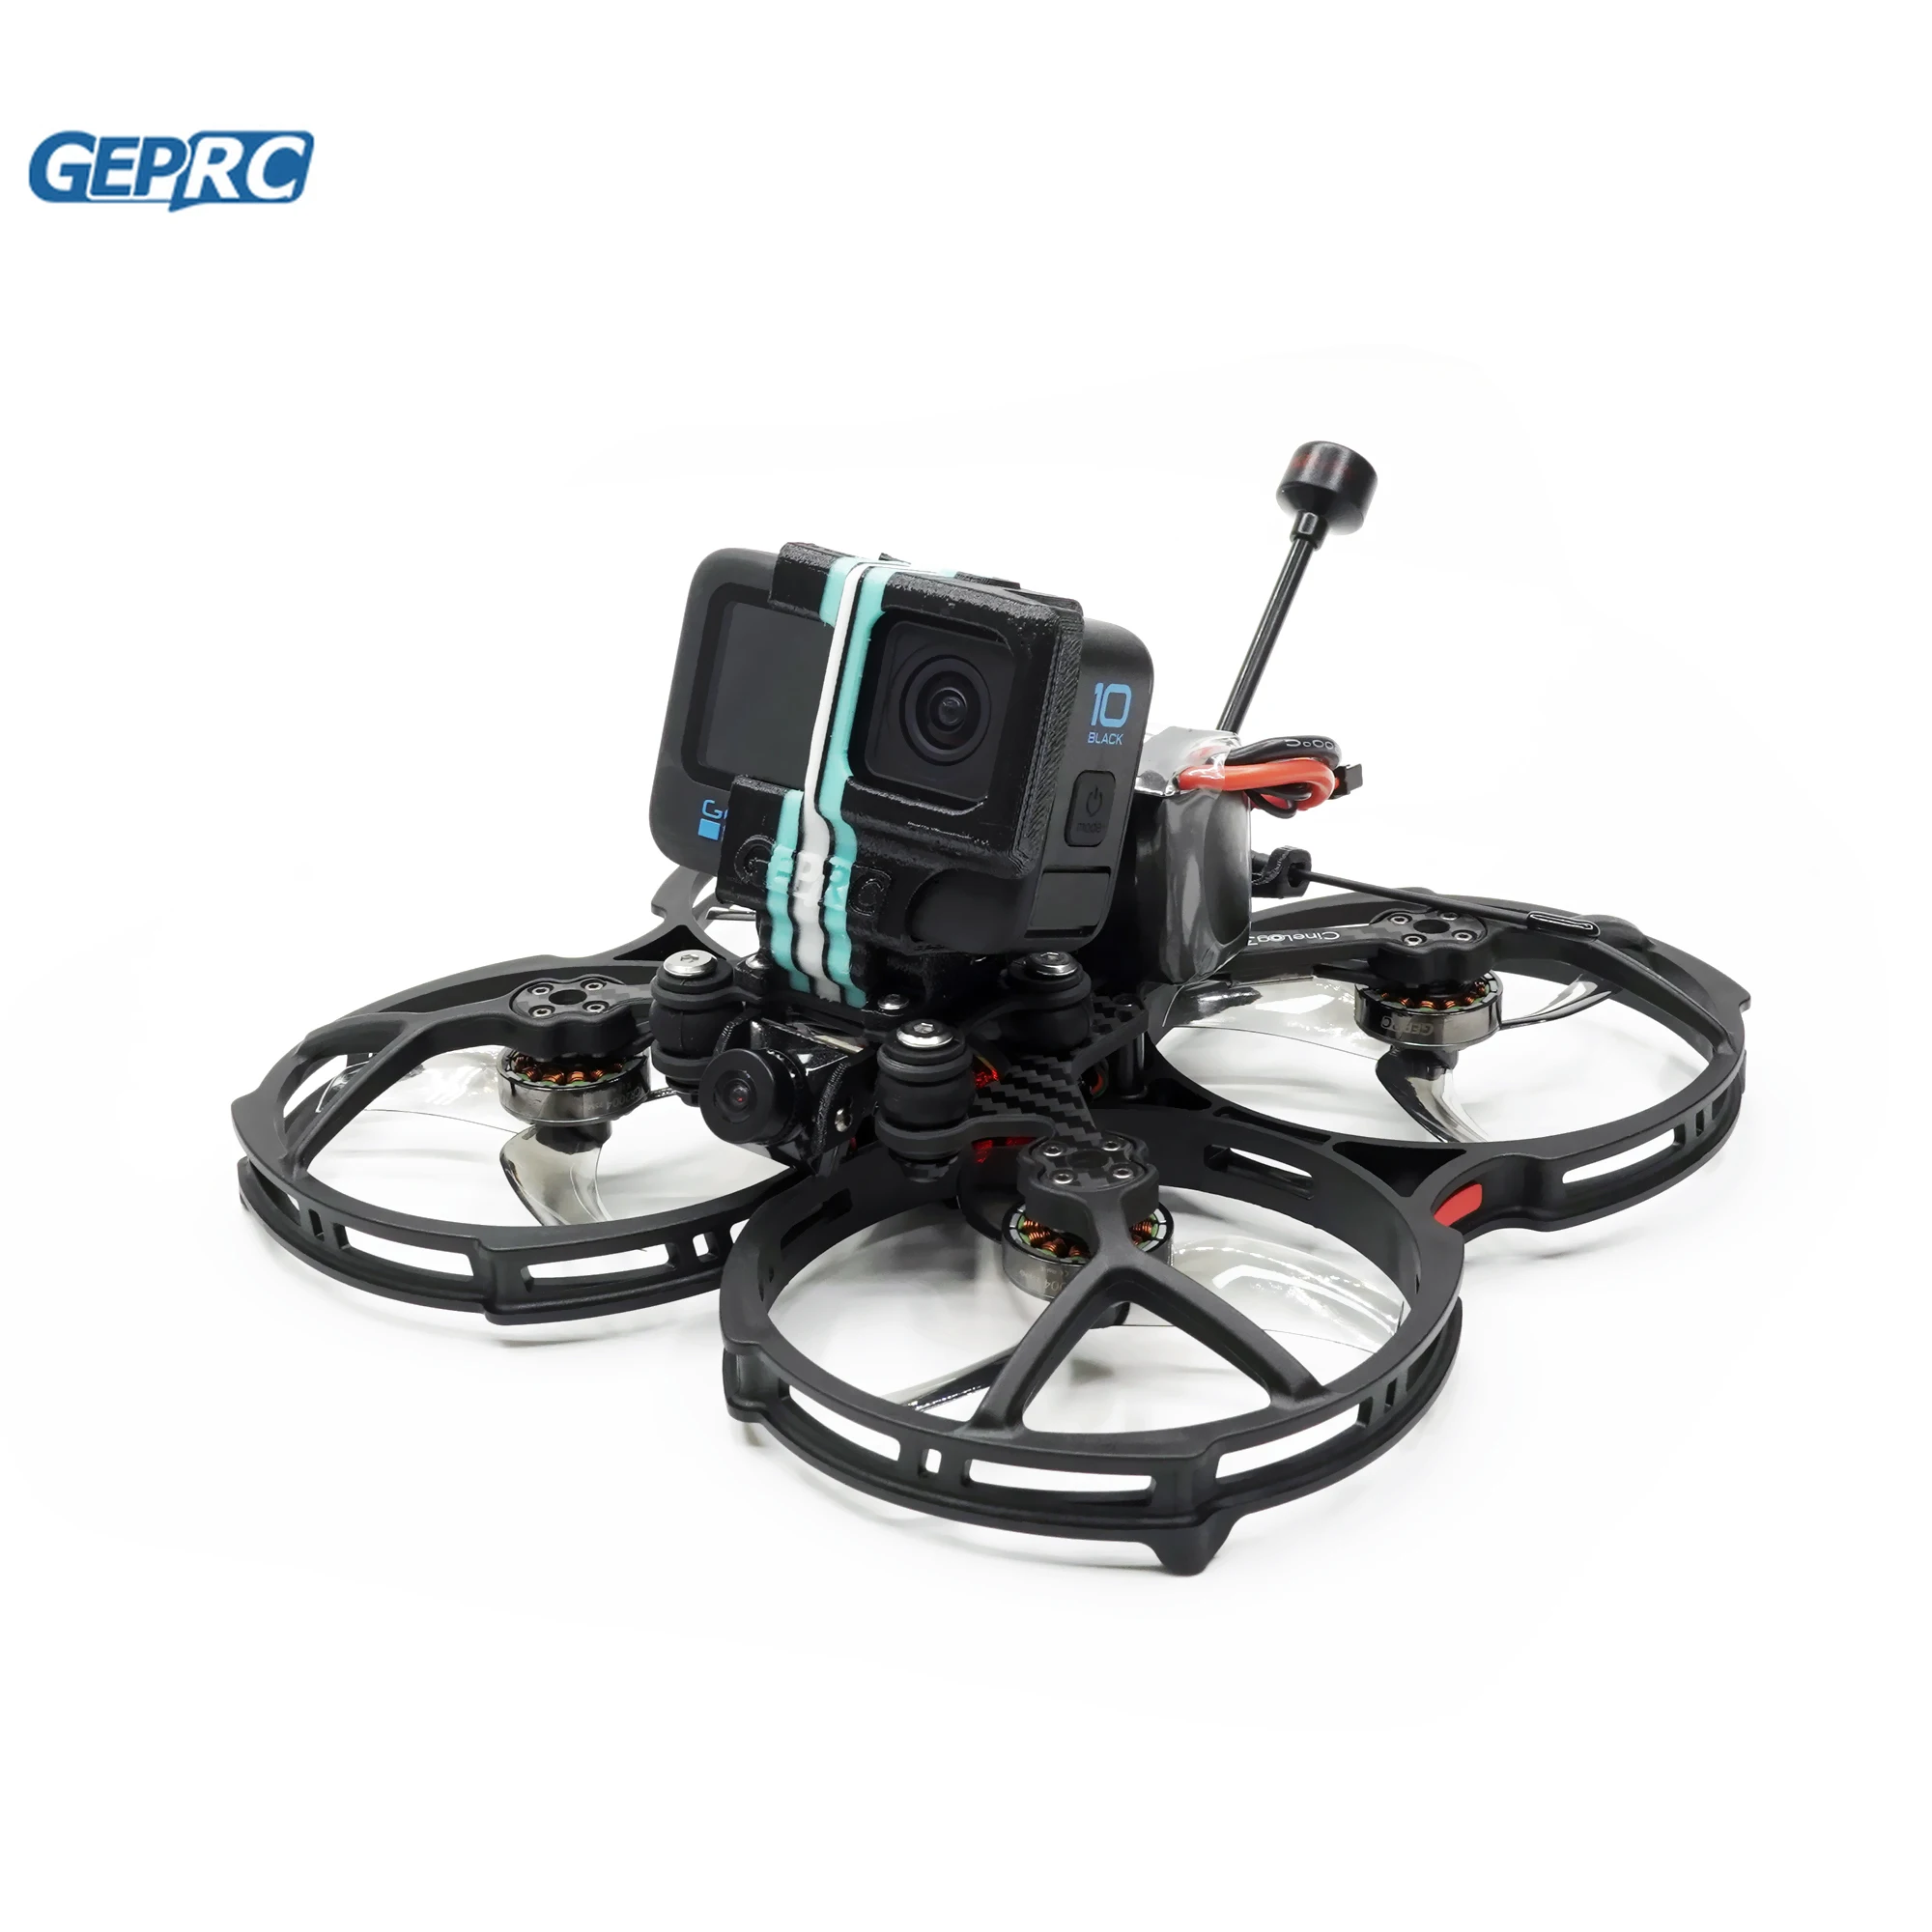 

GEPRC CineLog35 Analog CineWhoop FPV Drone 4S/6S Cinewhoop GR2004-1750KV / 2550KV Motor For RC FPV Quadcopter Freestyle Drone